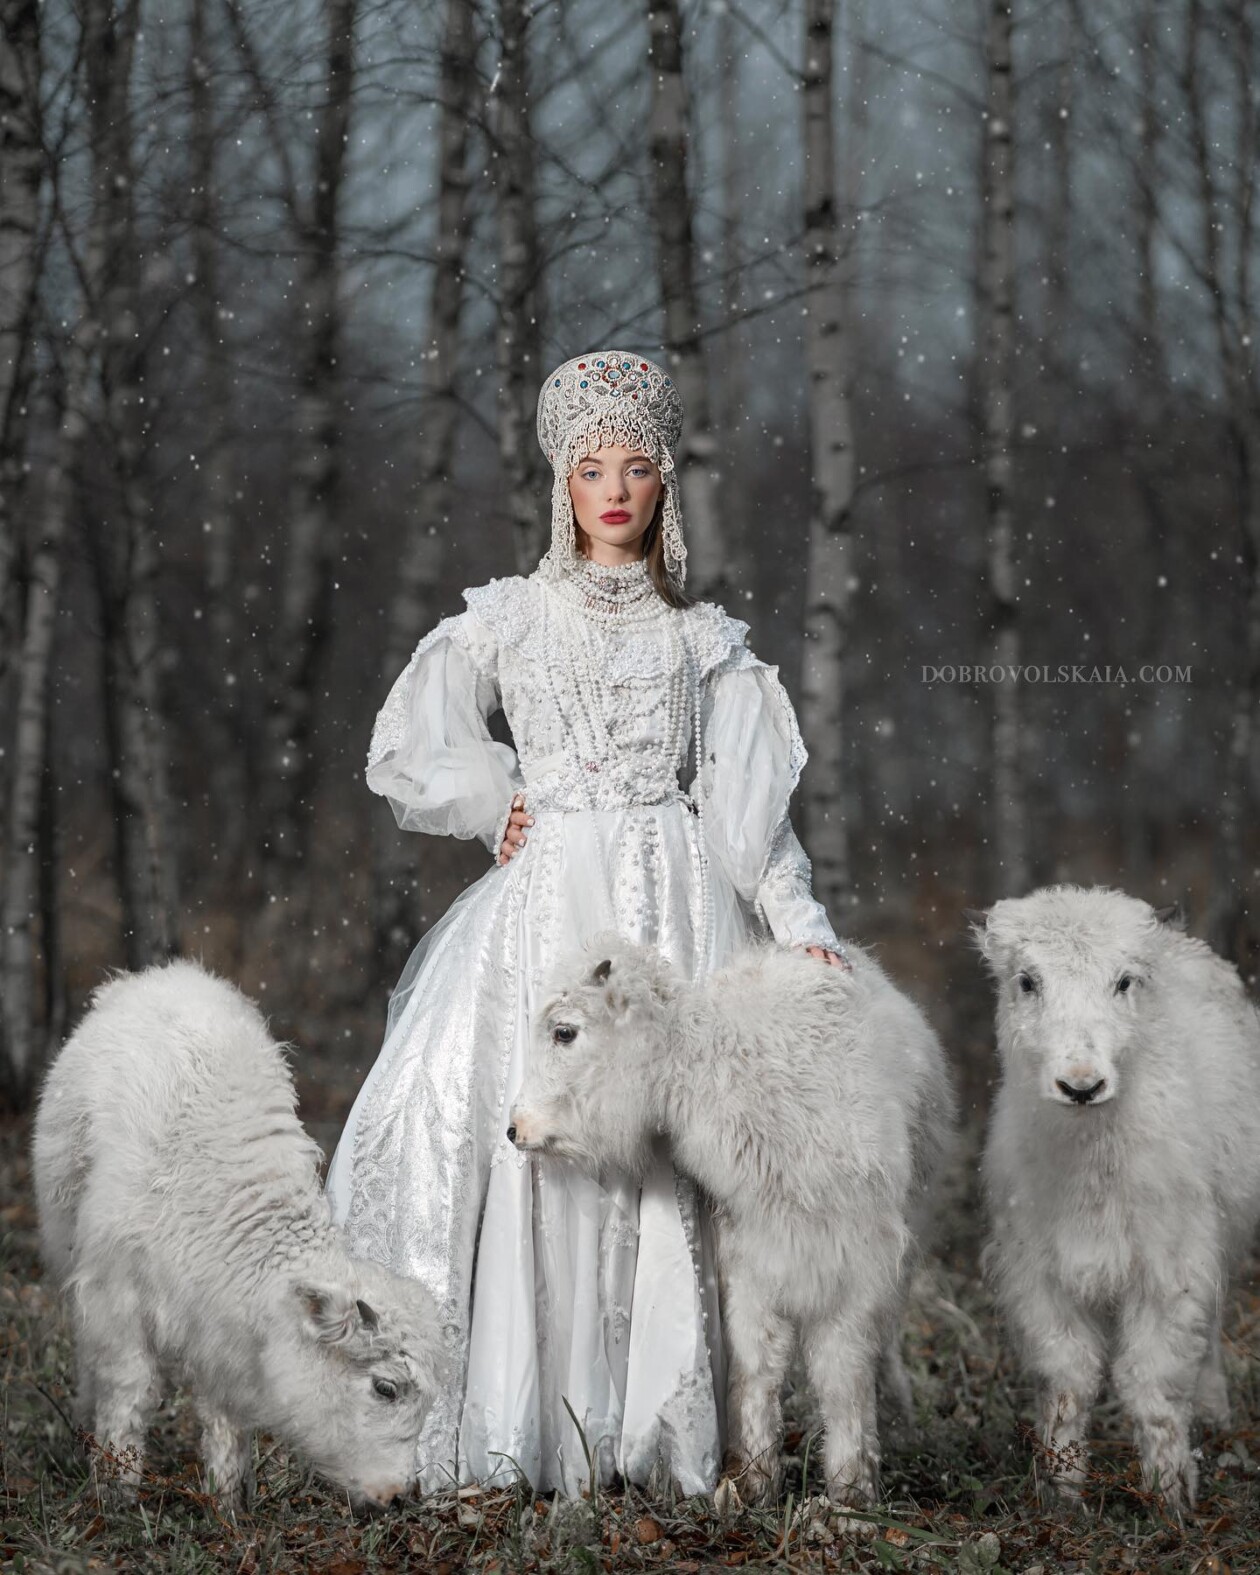 The Bond Between Humans And Animals In Anastasiya Dobrovolskaya's Portraits (21)